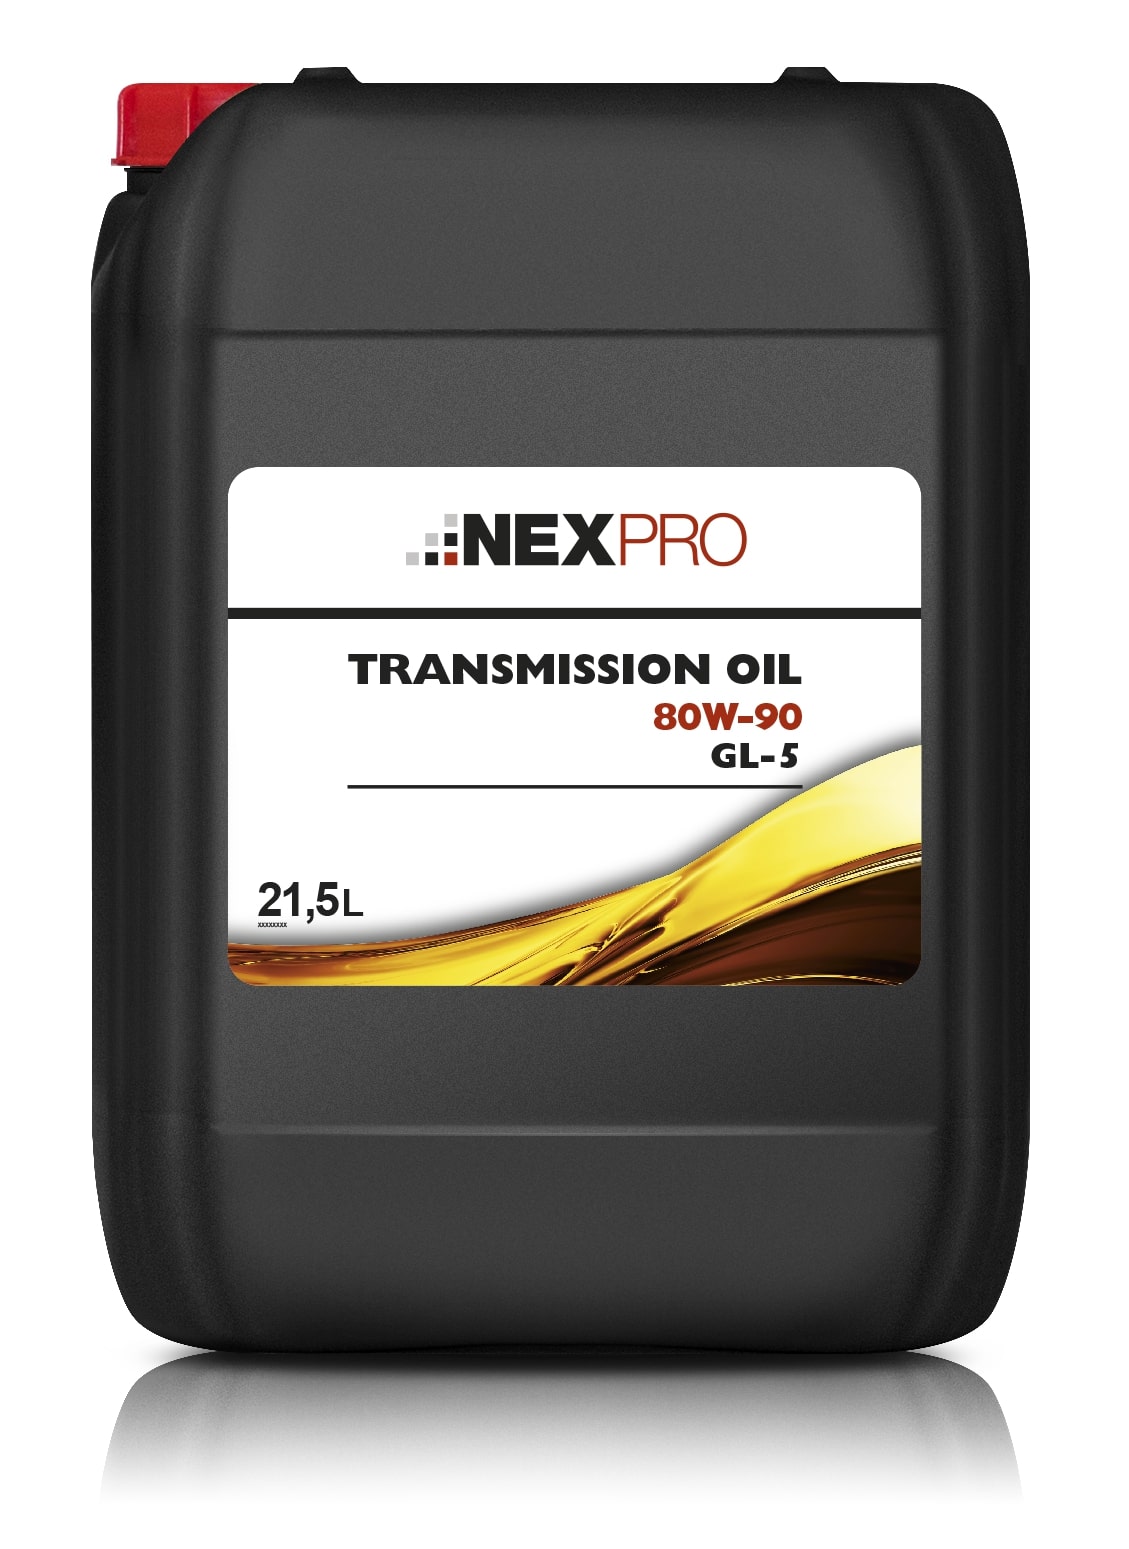 NEXPRO Transmission Oil GL-5 80W-90